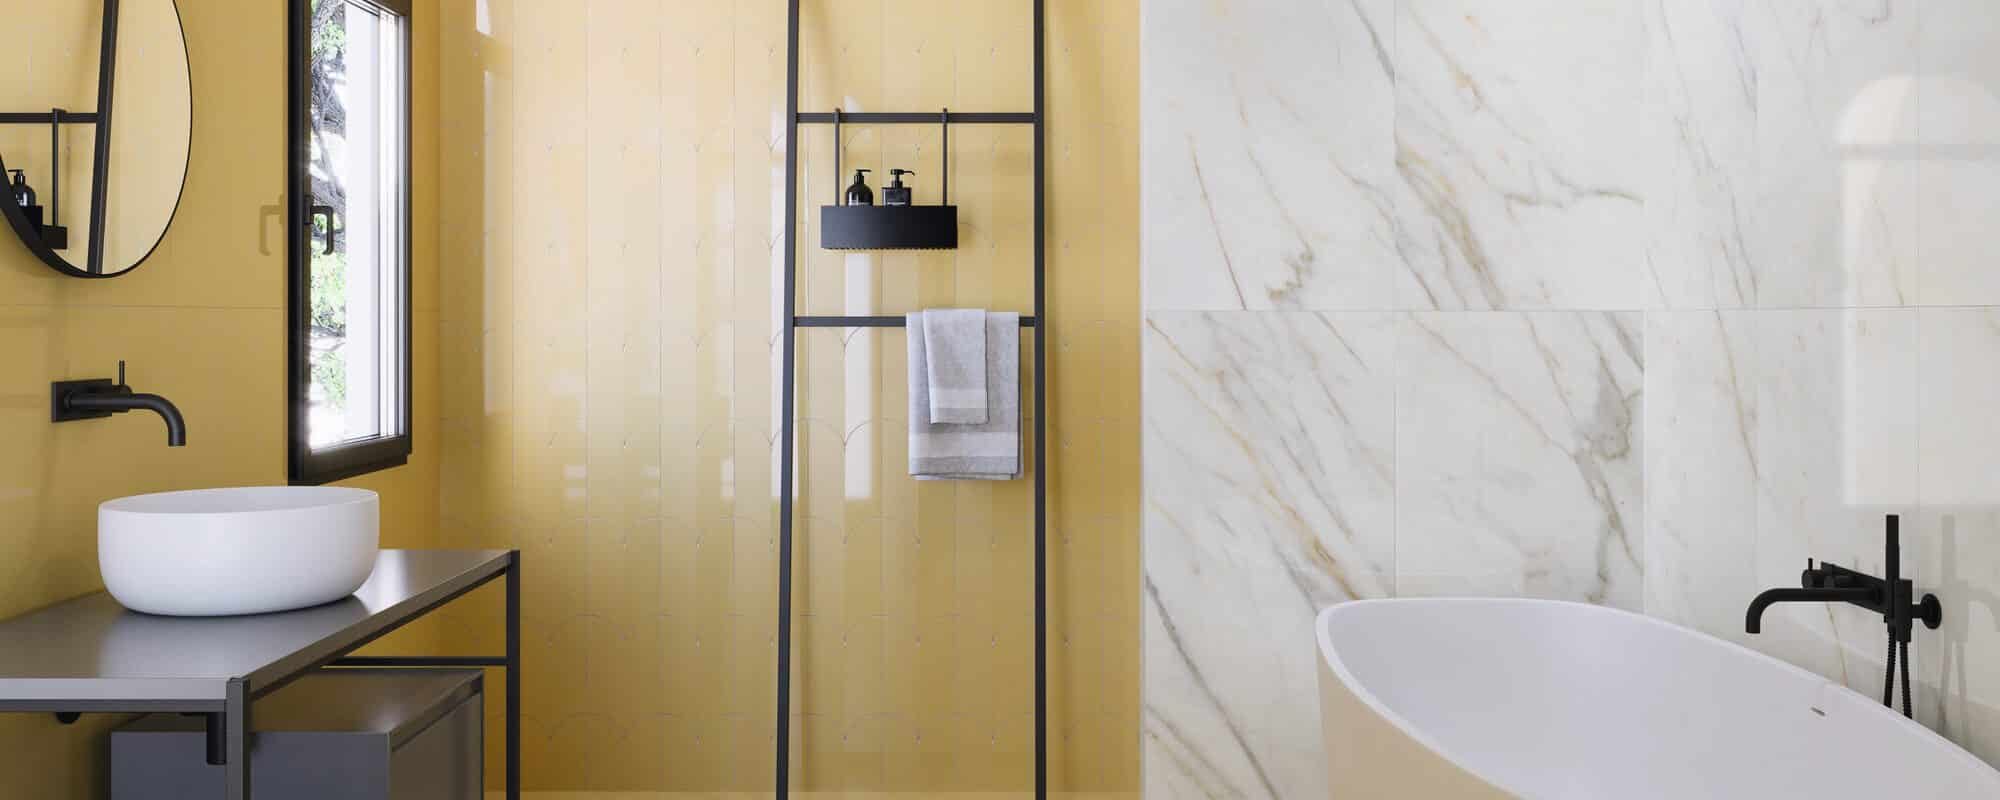 calacatta-slow-marble effect bathroom tiles london slider 3